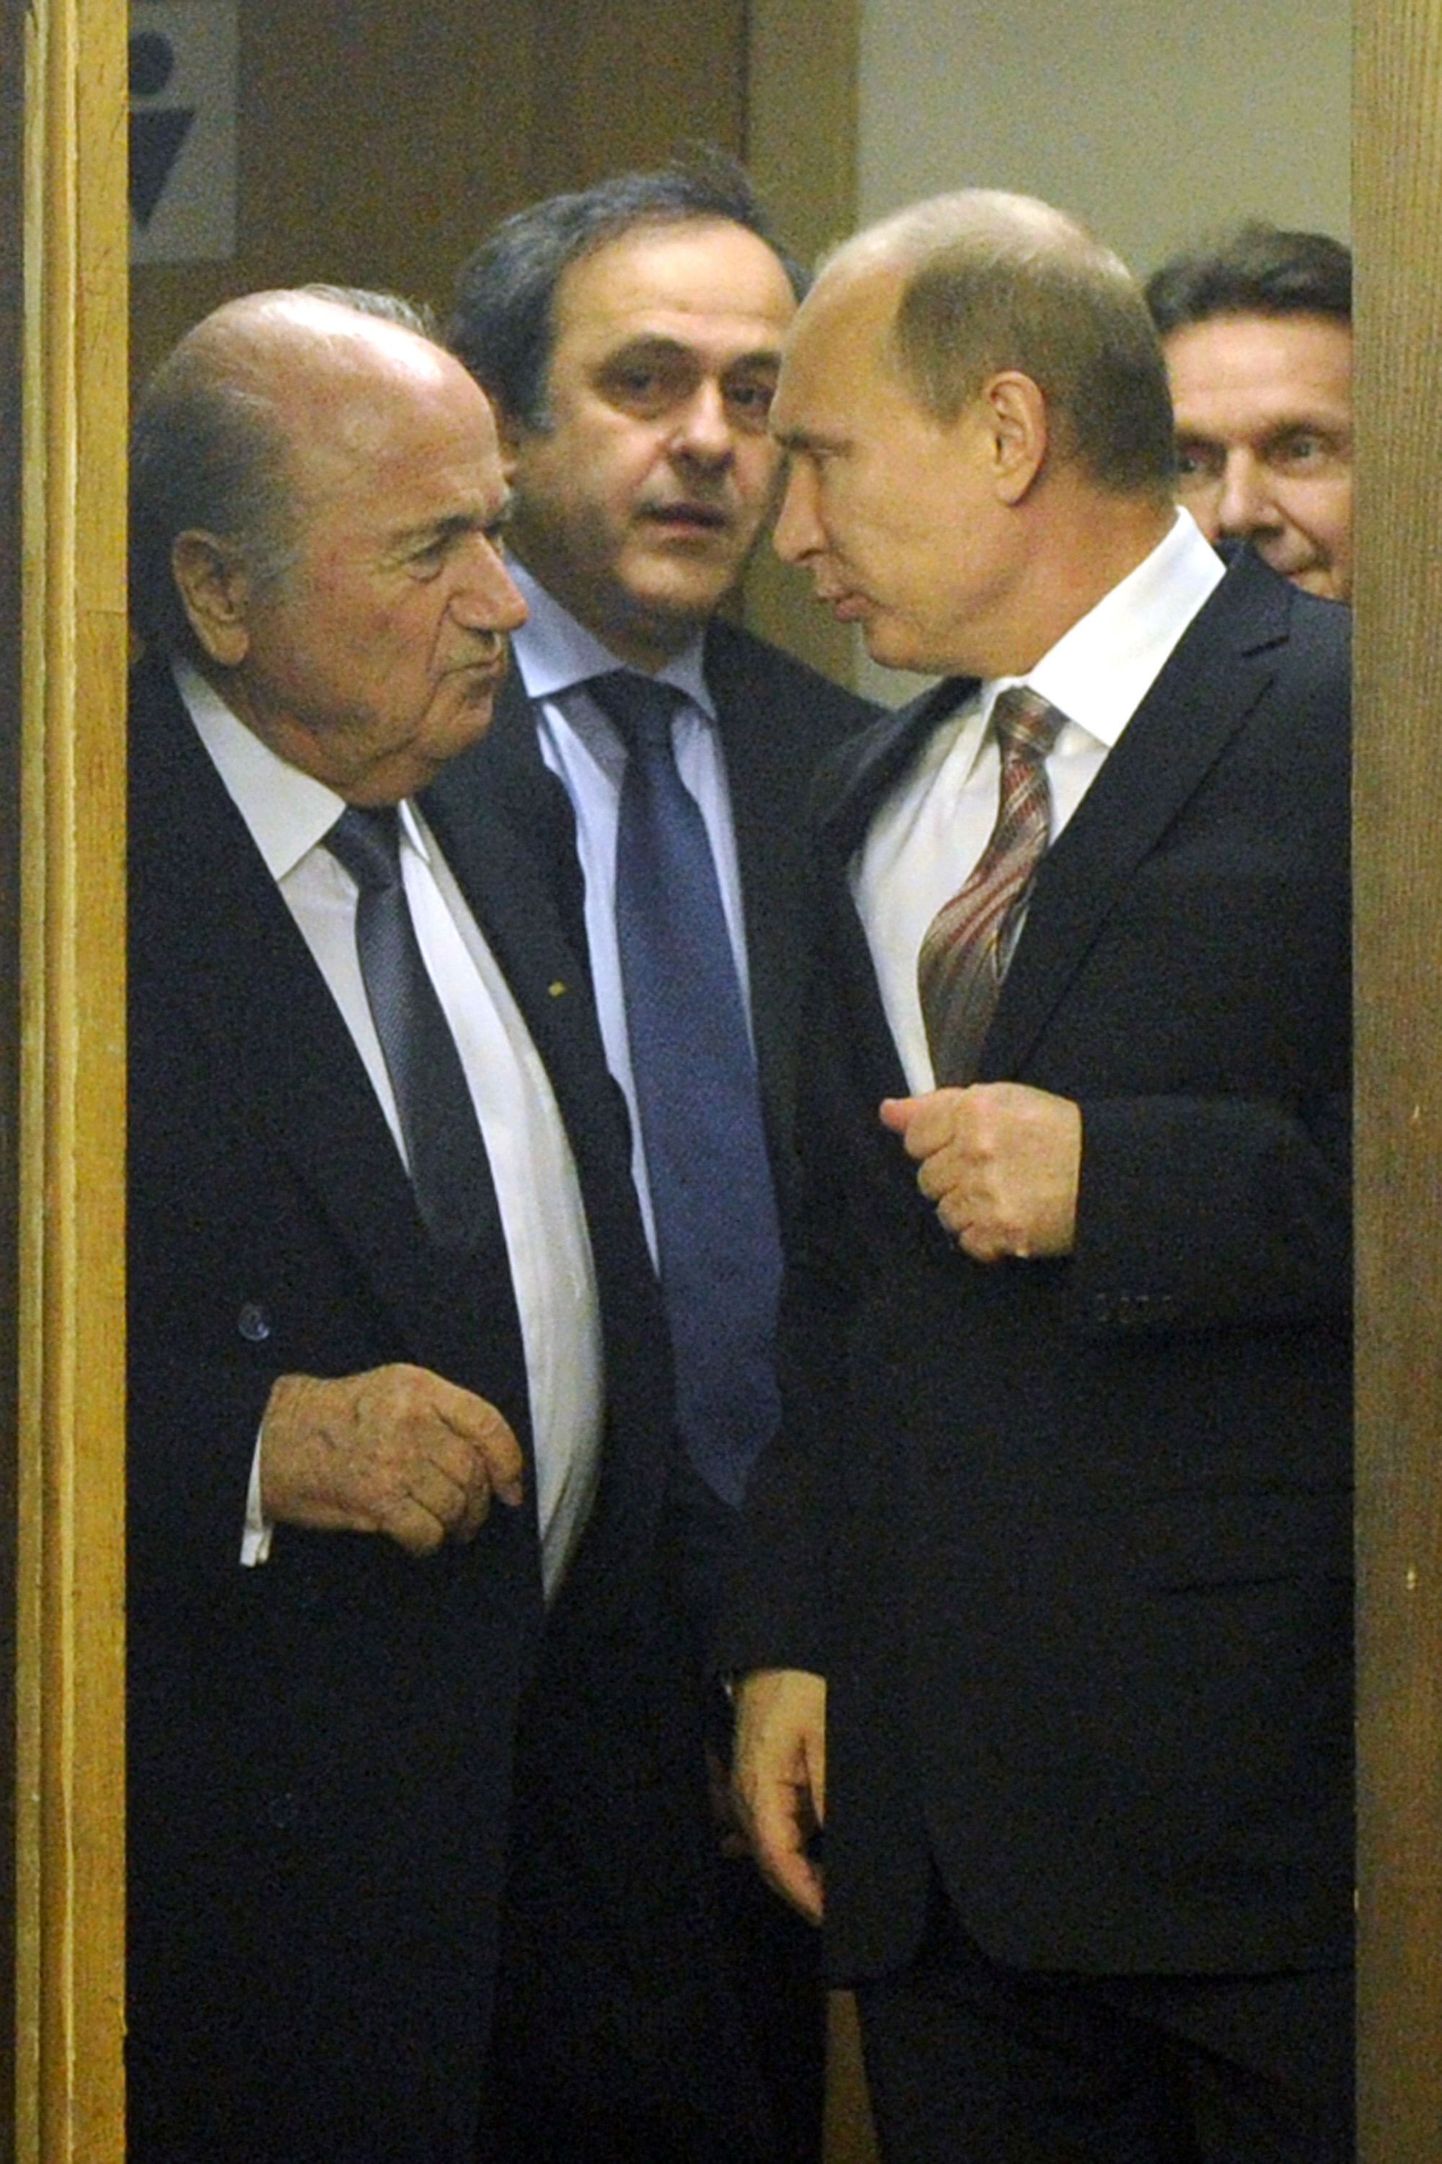 Встреча Владимира Путина (справа) с президентом ФИФА Зеппом Блаттером (слева) и президентом УЕФА Мишелем Платини (в центре).